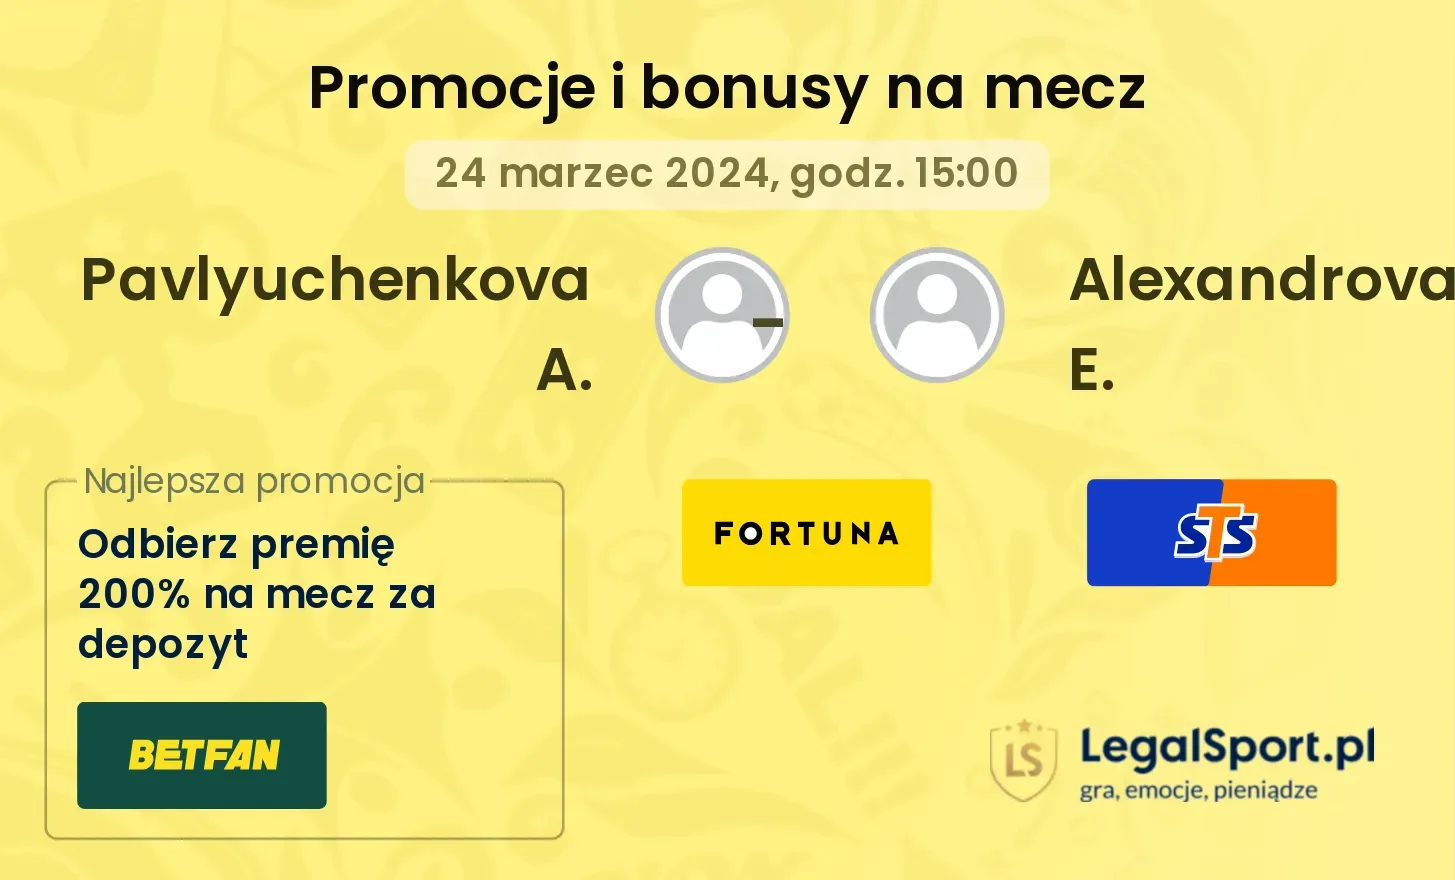 Pavlyuchenkova A. - Alexandrova E. promocje bonusy na mecz